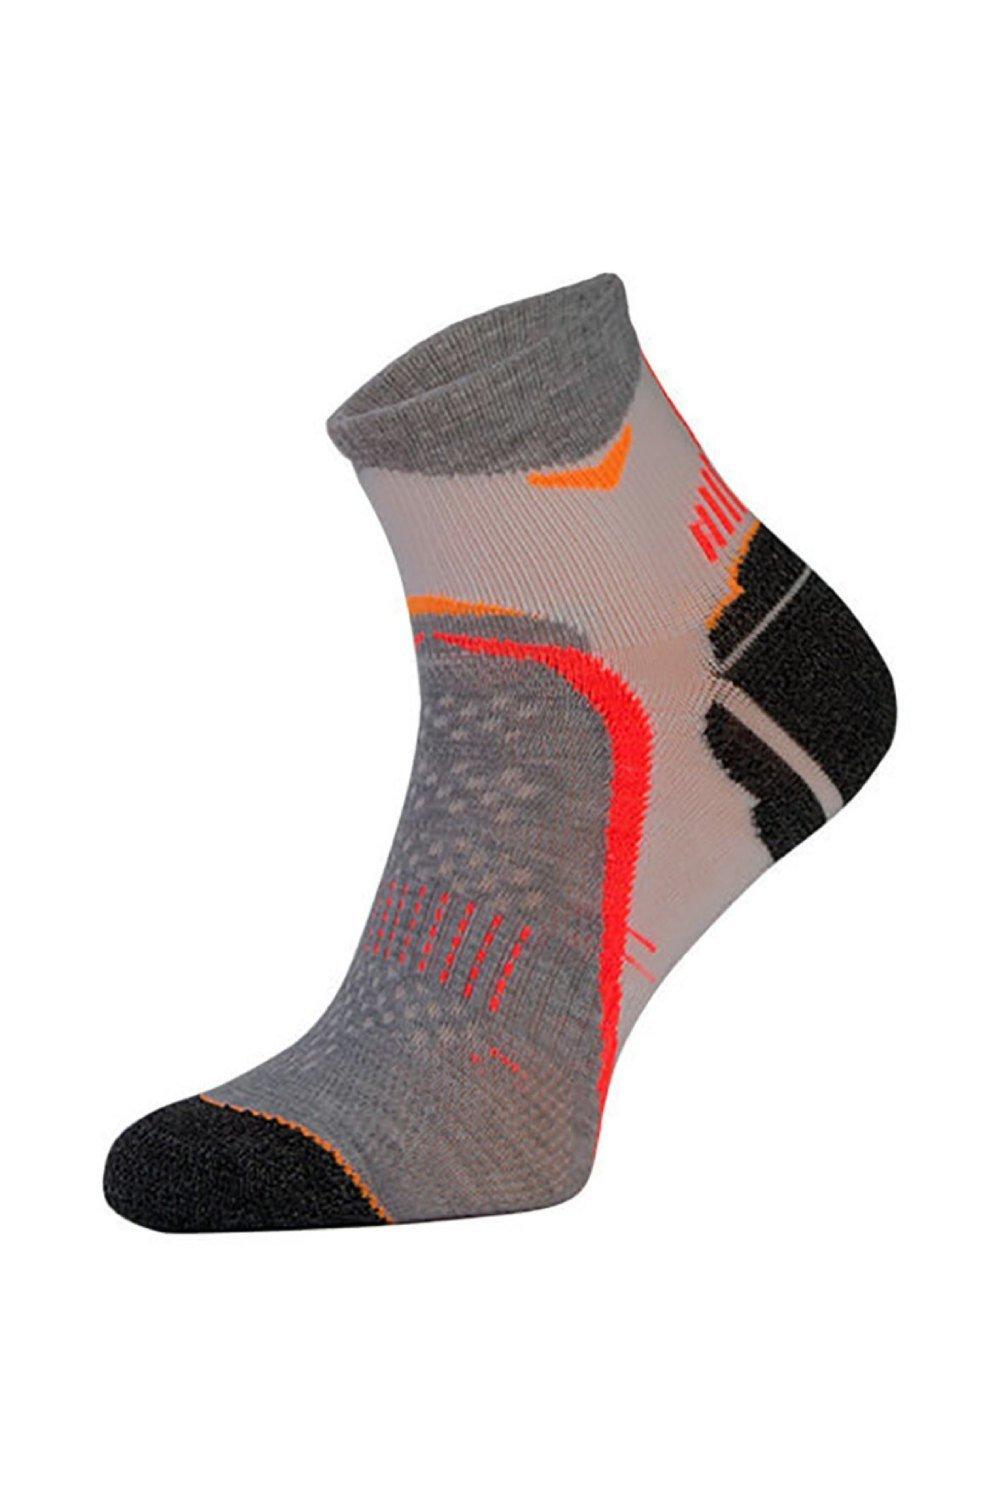 Drytex Yarn Arch Support Durable Running Jogging Socks